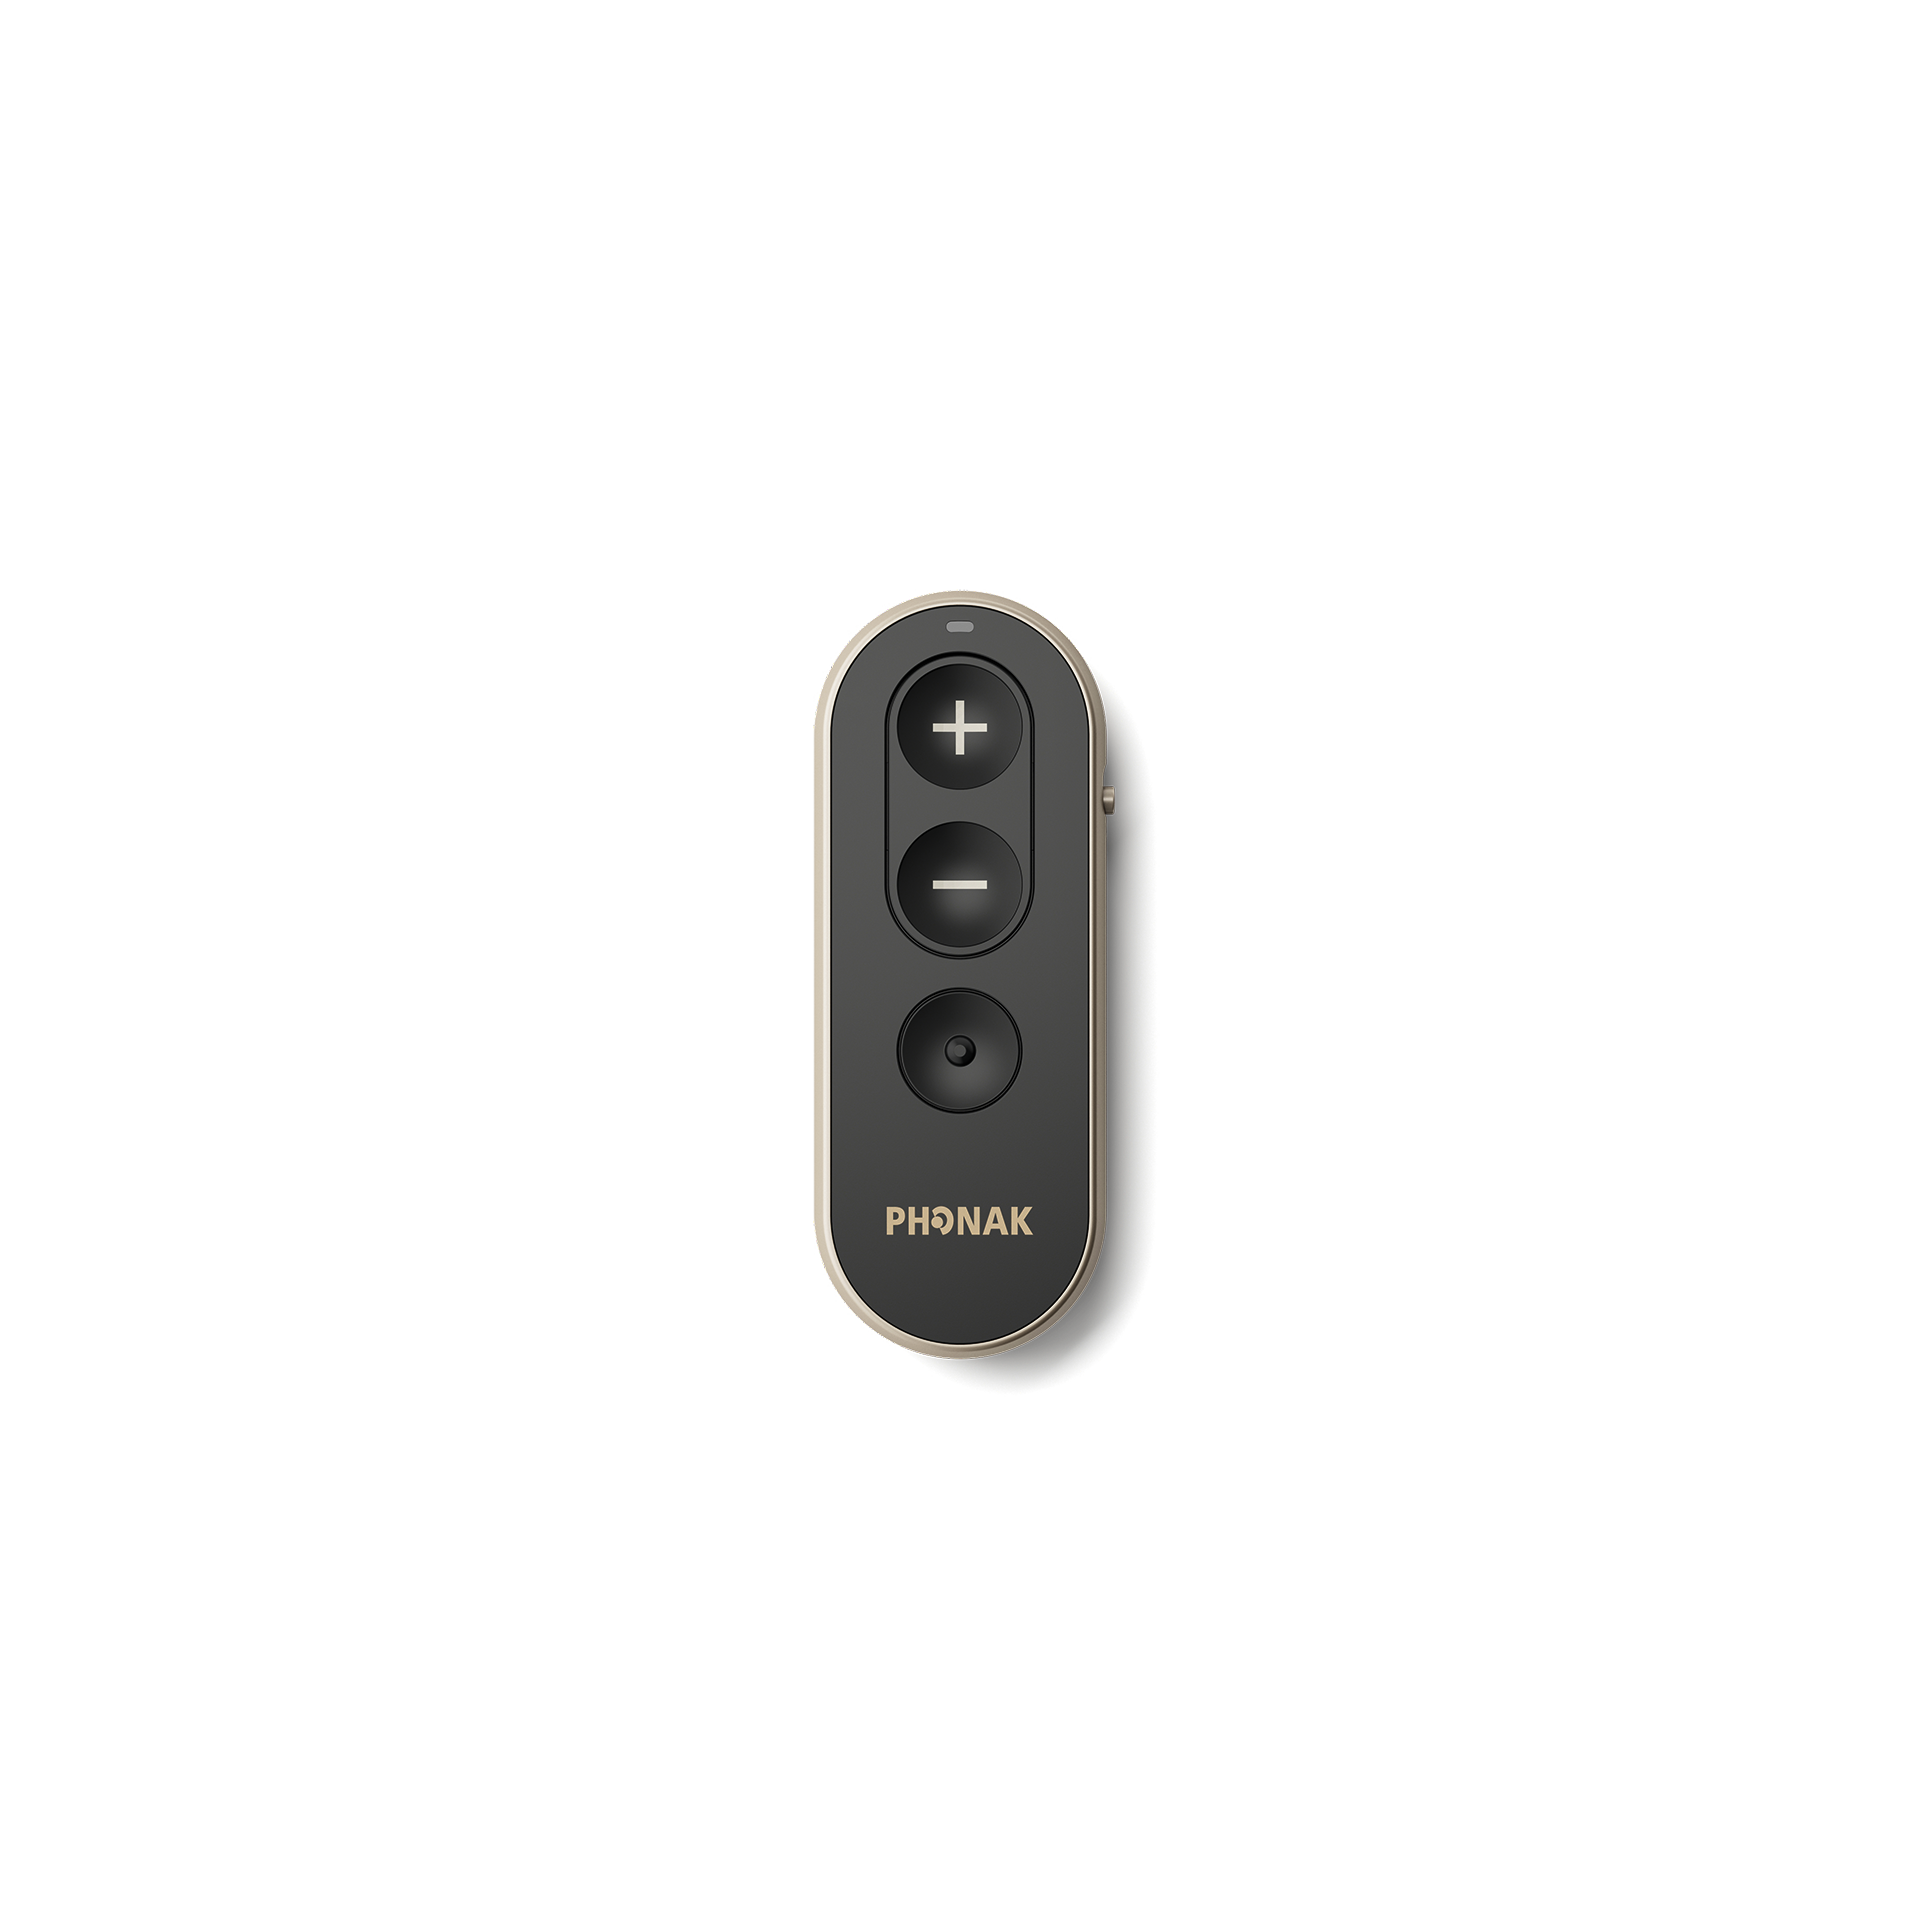 Phonak RemoteControl-tilbehør til høreapparat – sett forfra.